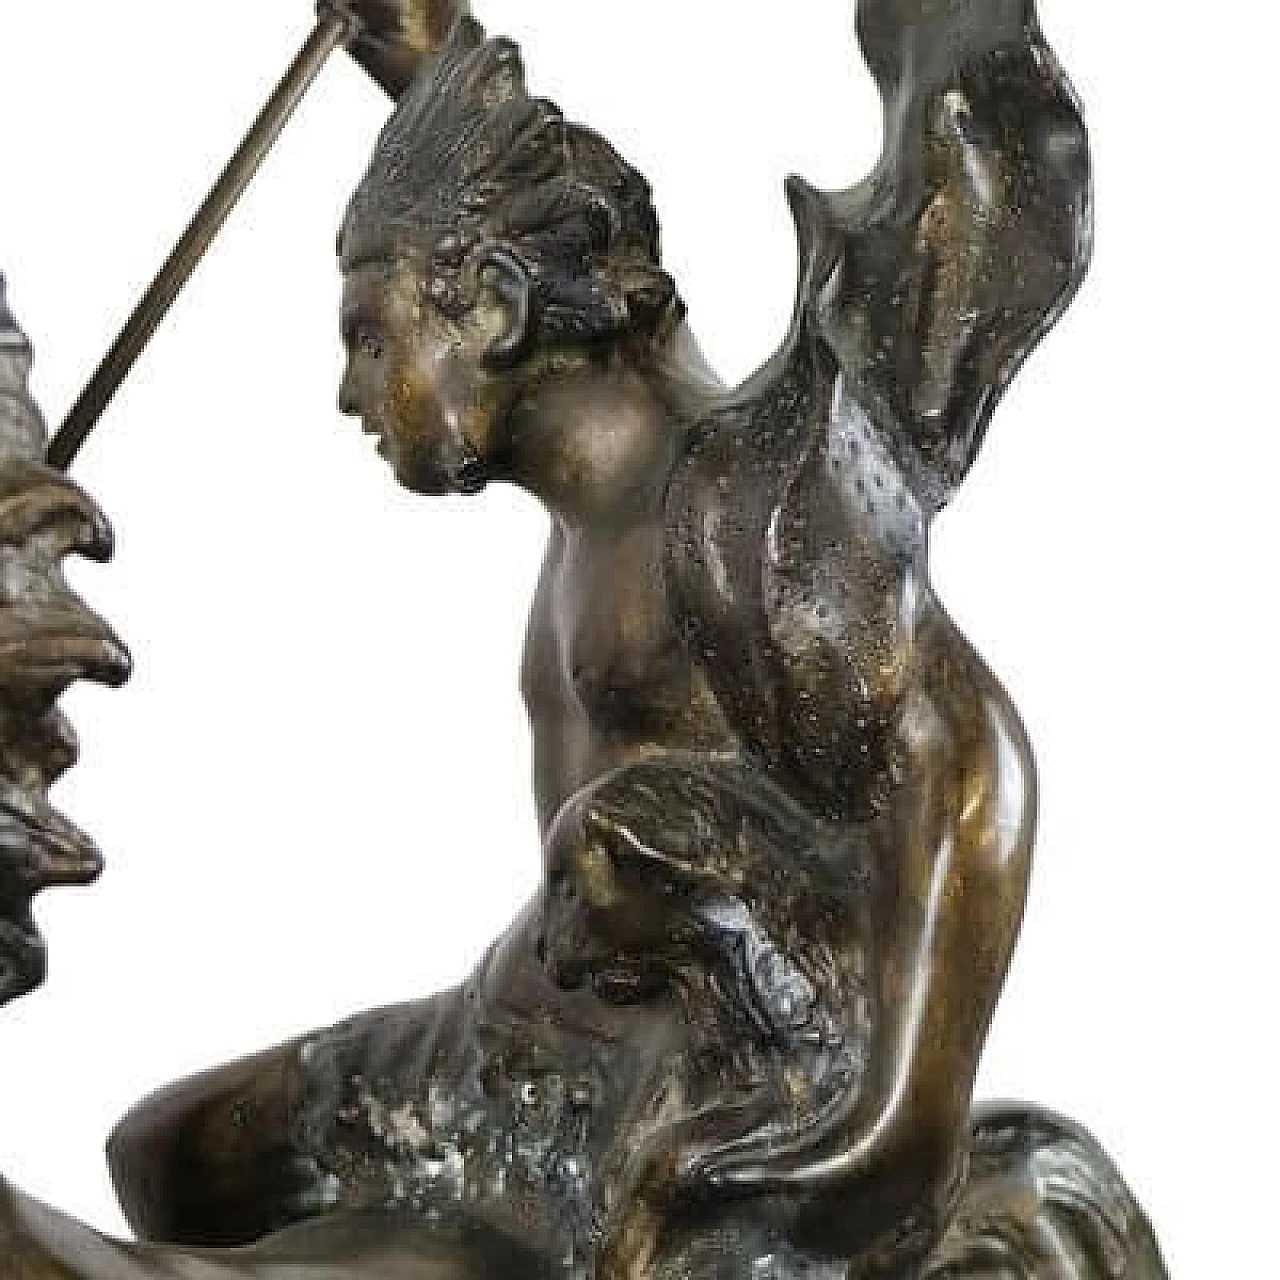 Indian warrior on horseback, reproduction after Tommaso Campajola, bronze sculpture 9